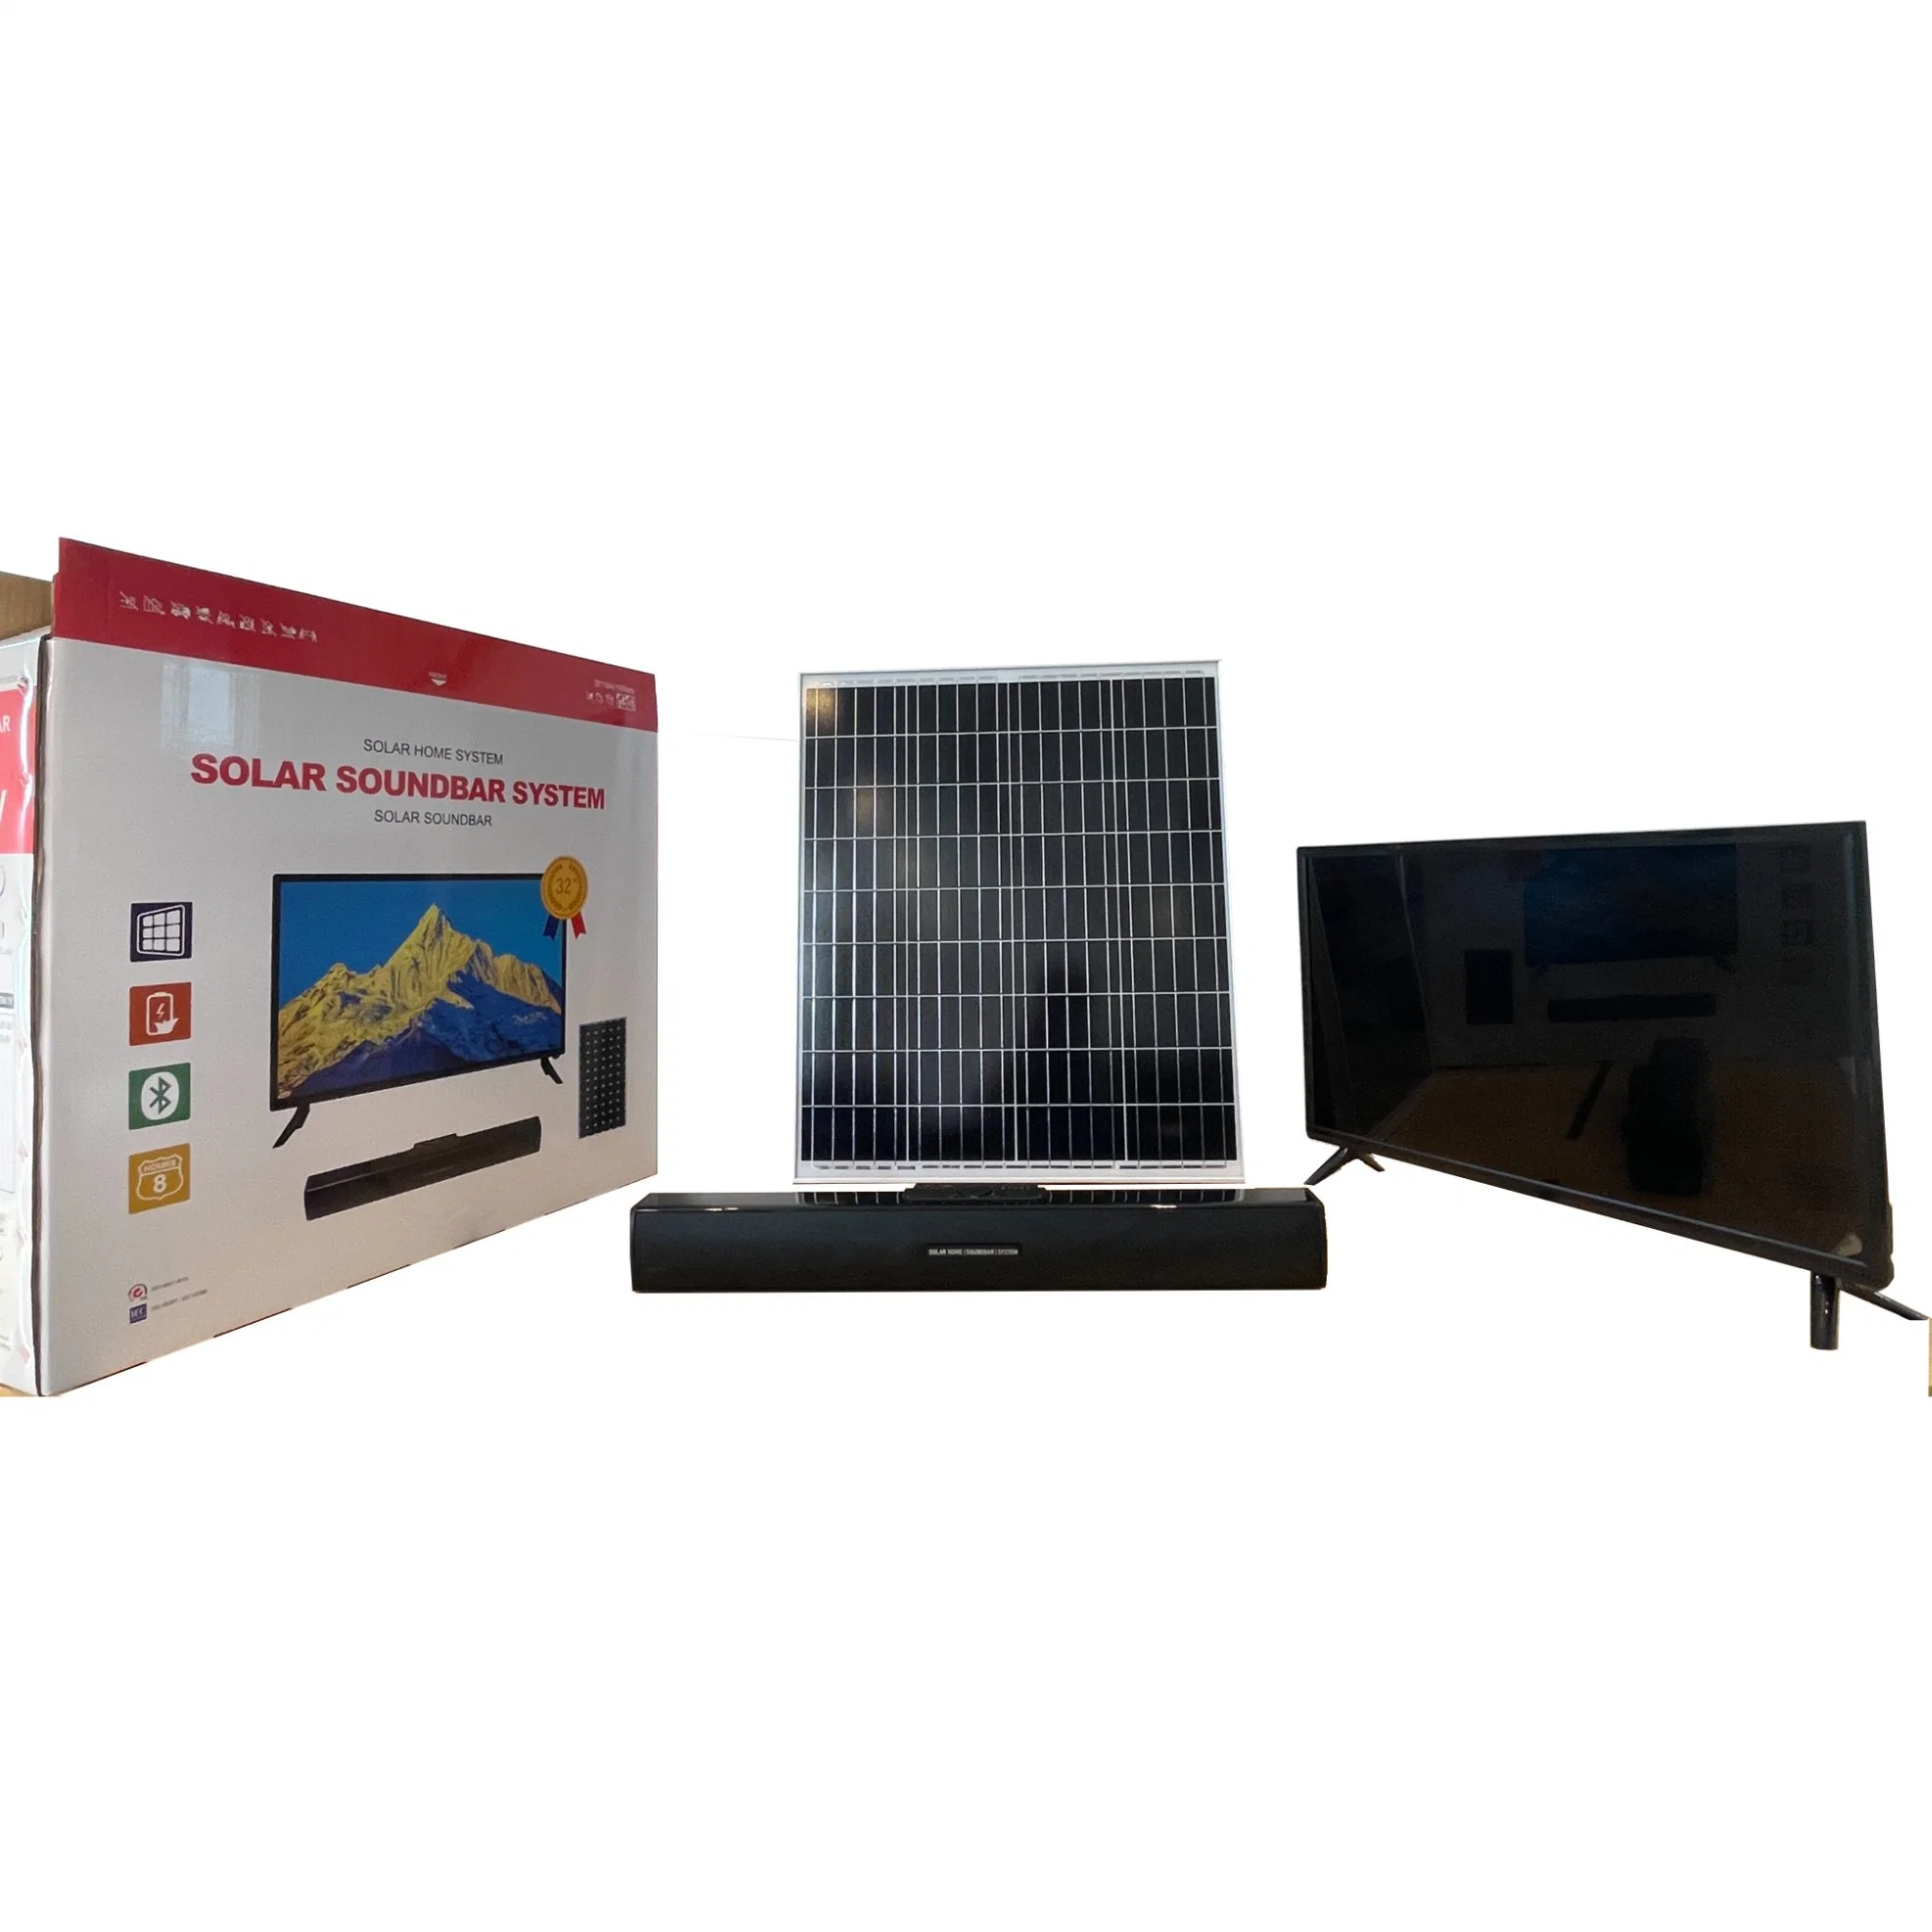 Solar Energy Kit Solar Soundbar TV System 22ah Solar Soundbar +32 Inch Solar TV Solar Home Theatre Suitable for Party Home and Commercial